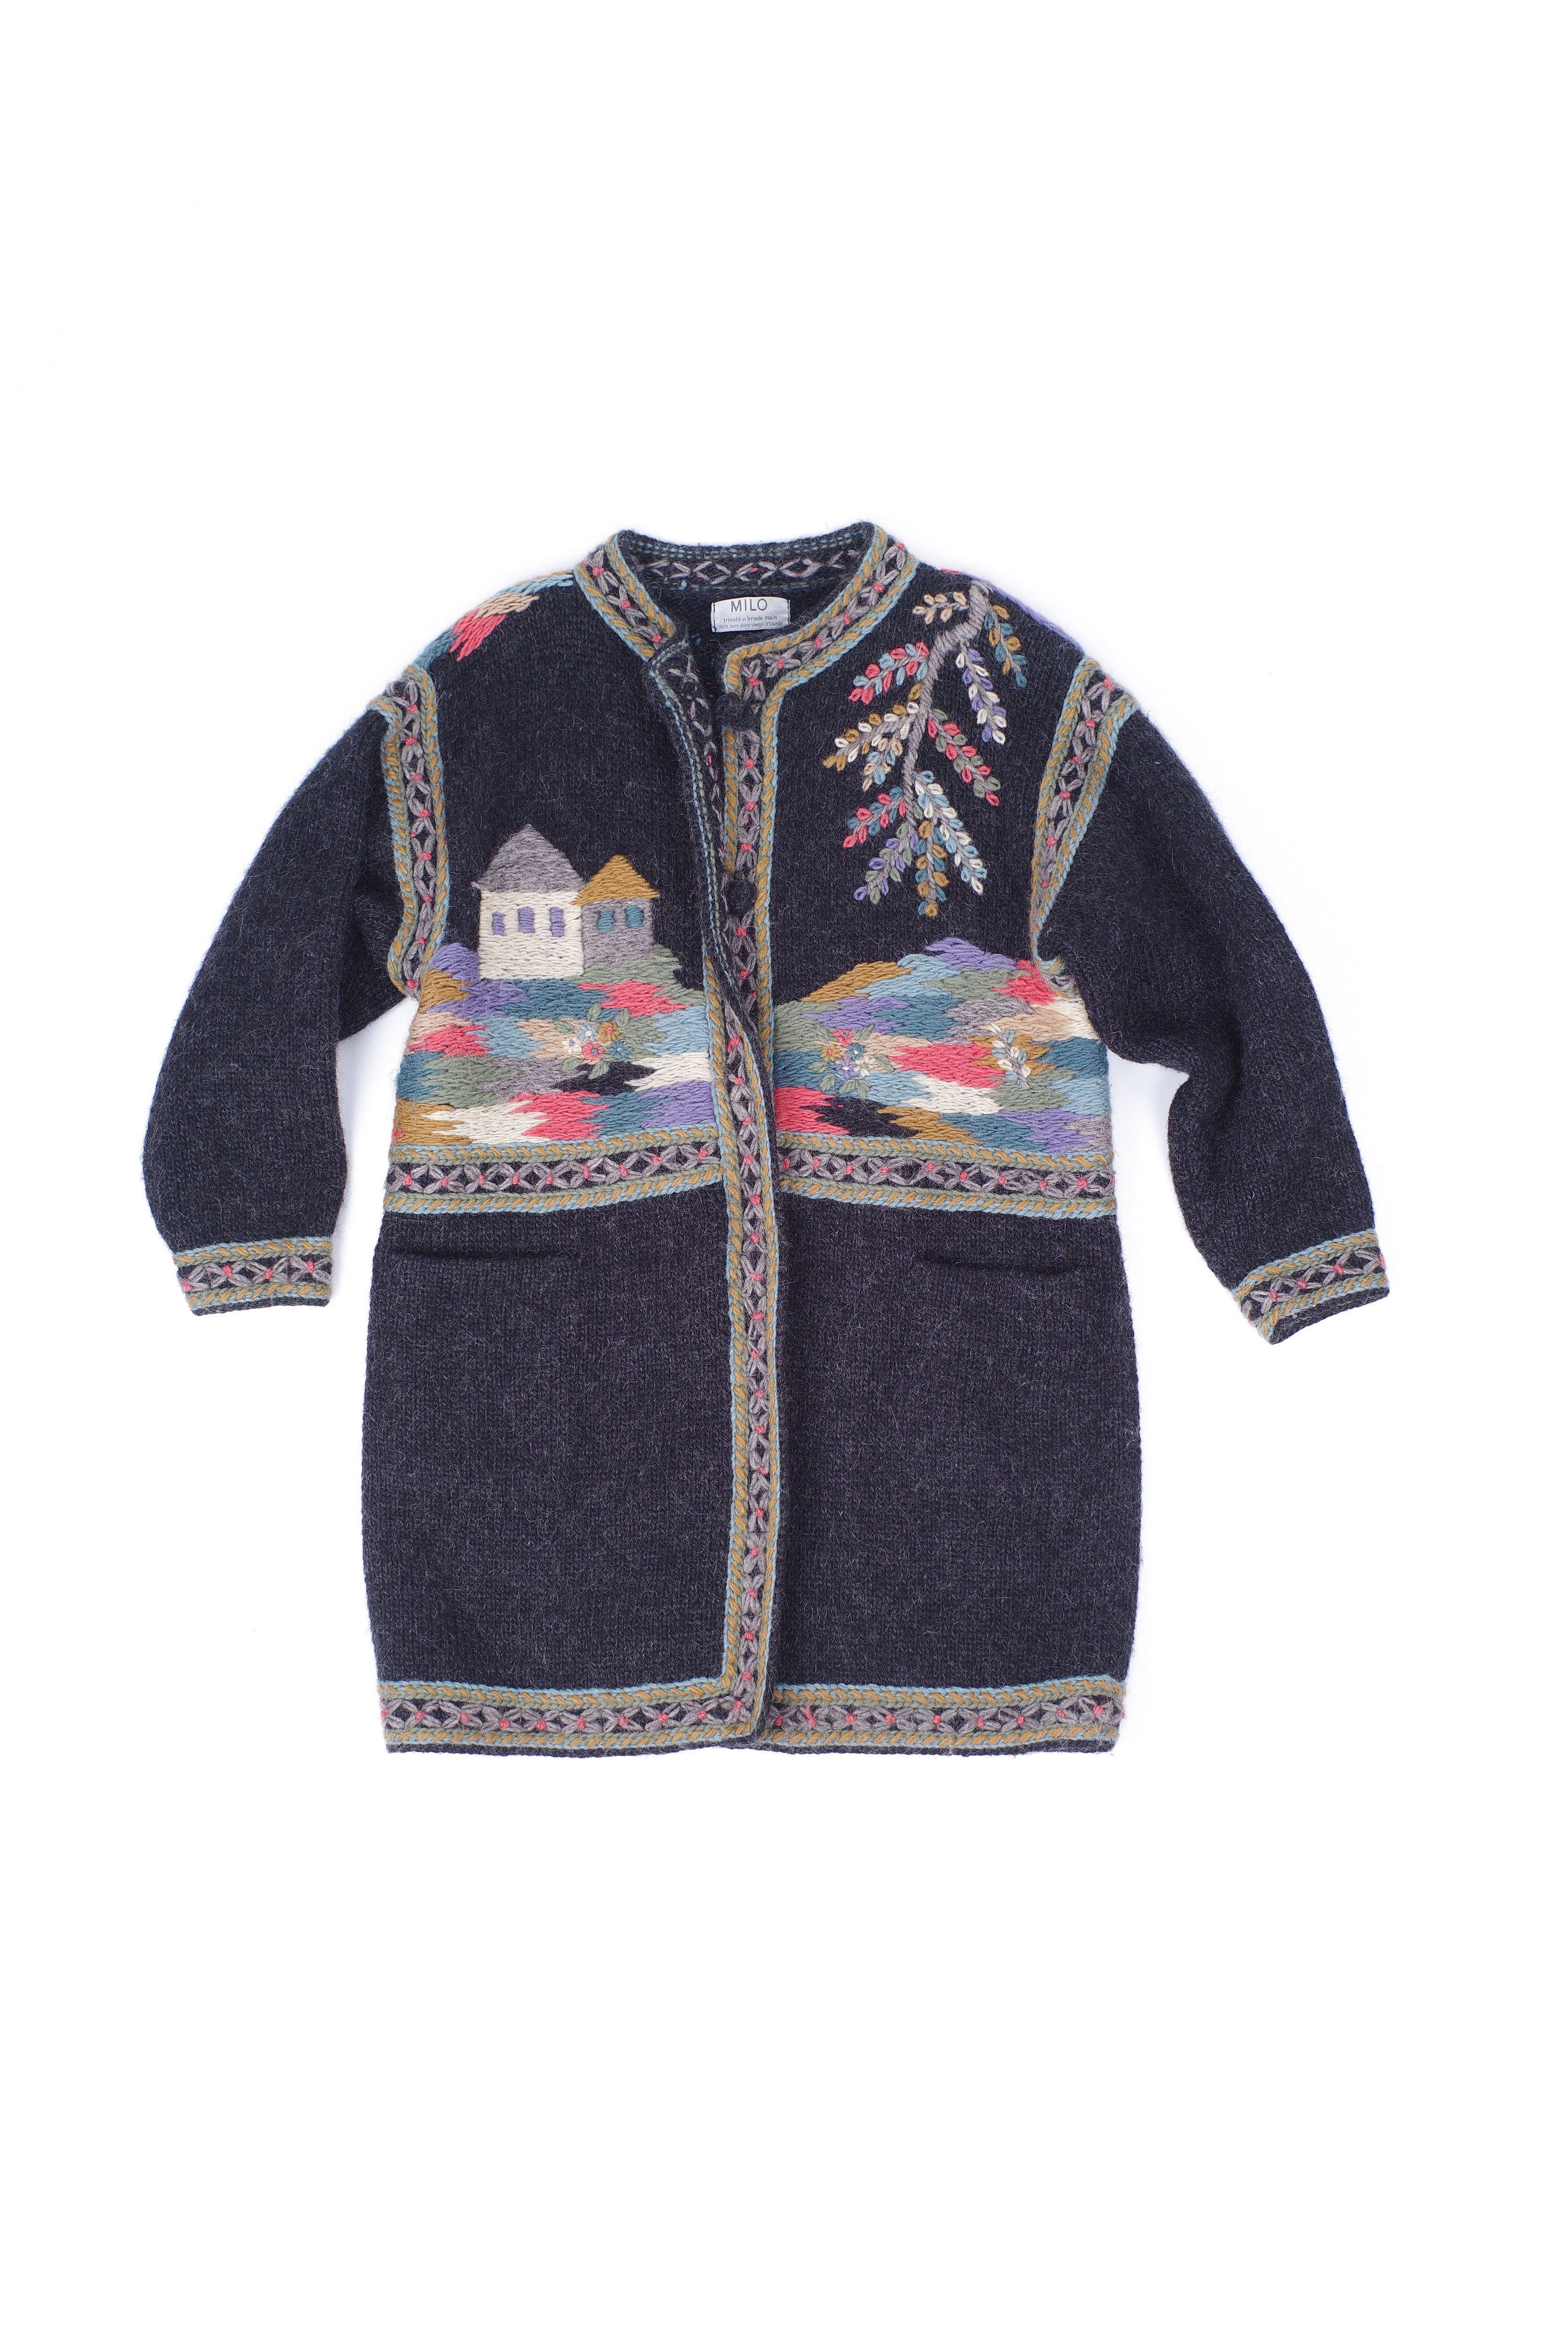 Scenic Landscape Embroidered Icelandic Wool Cardigan Coat, Size XL